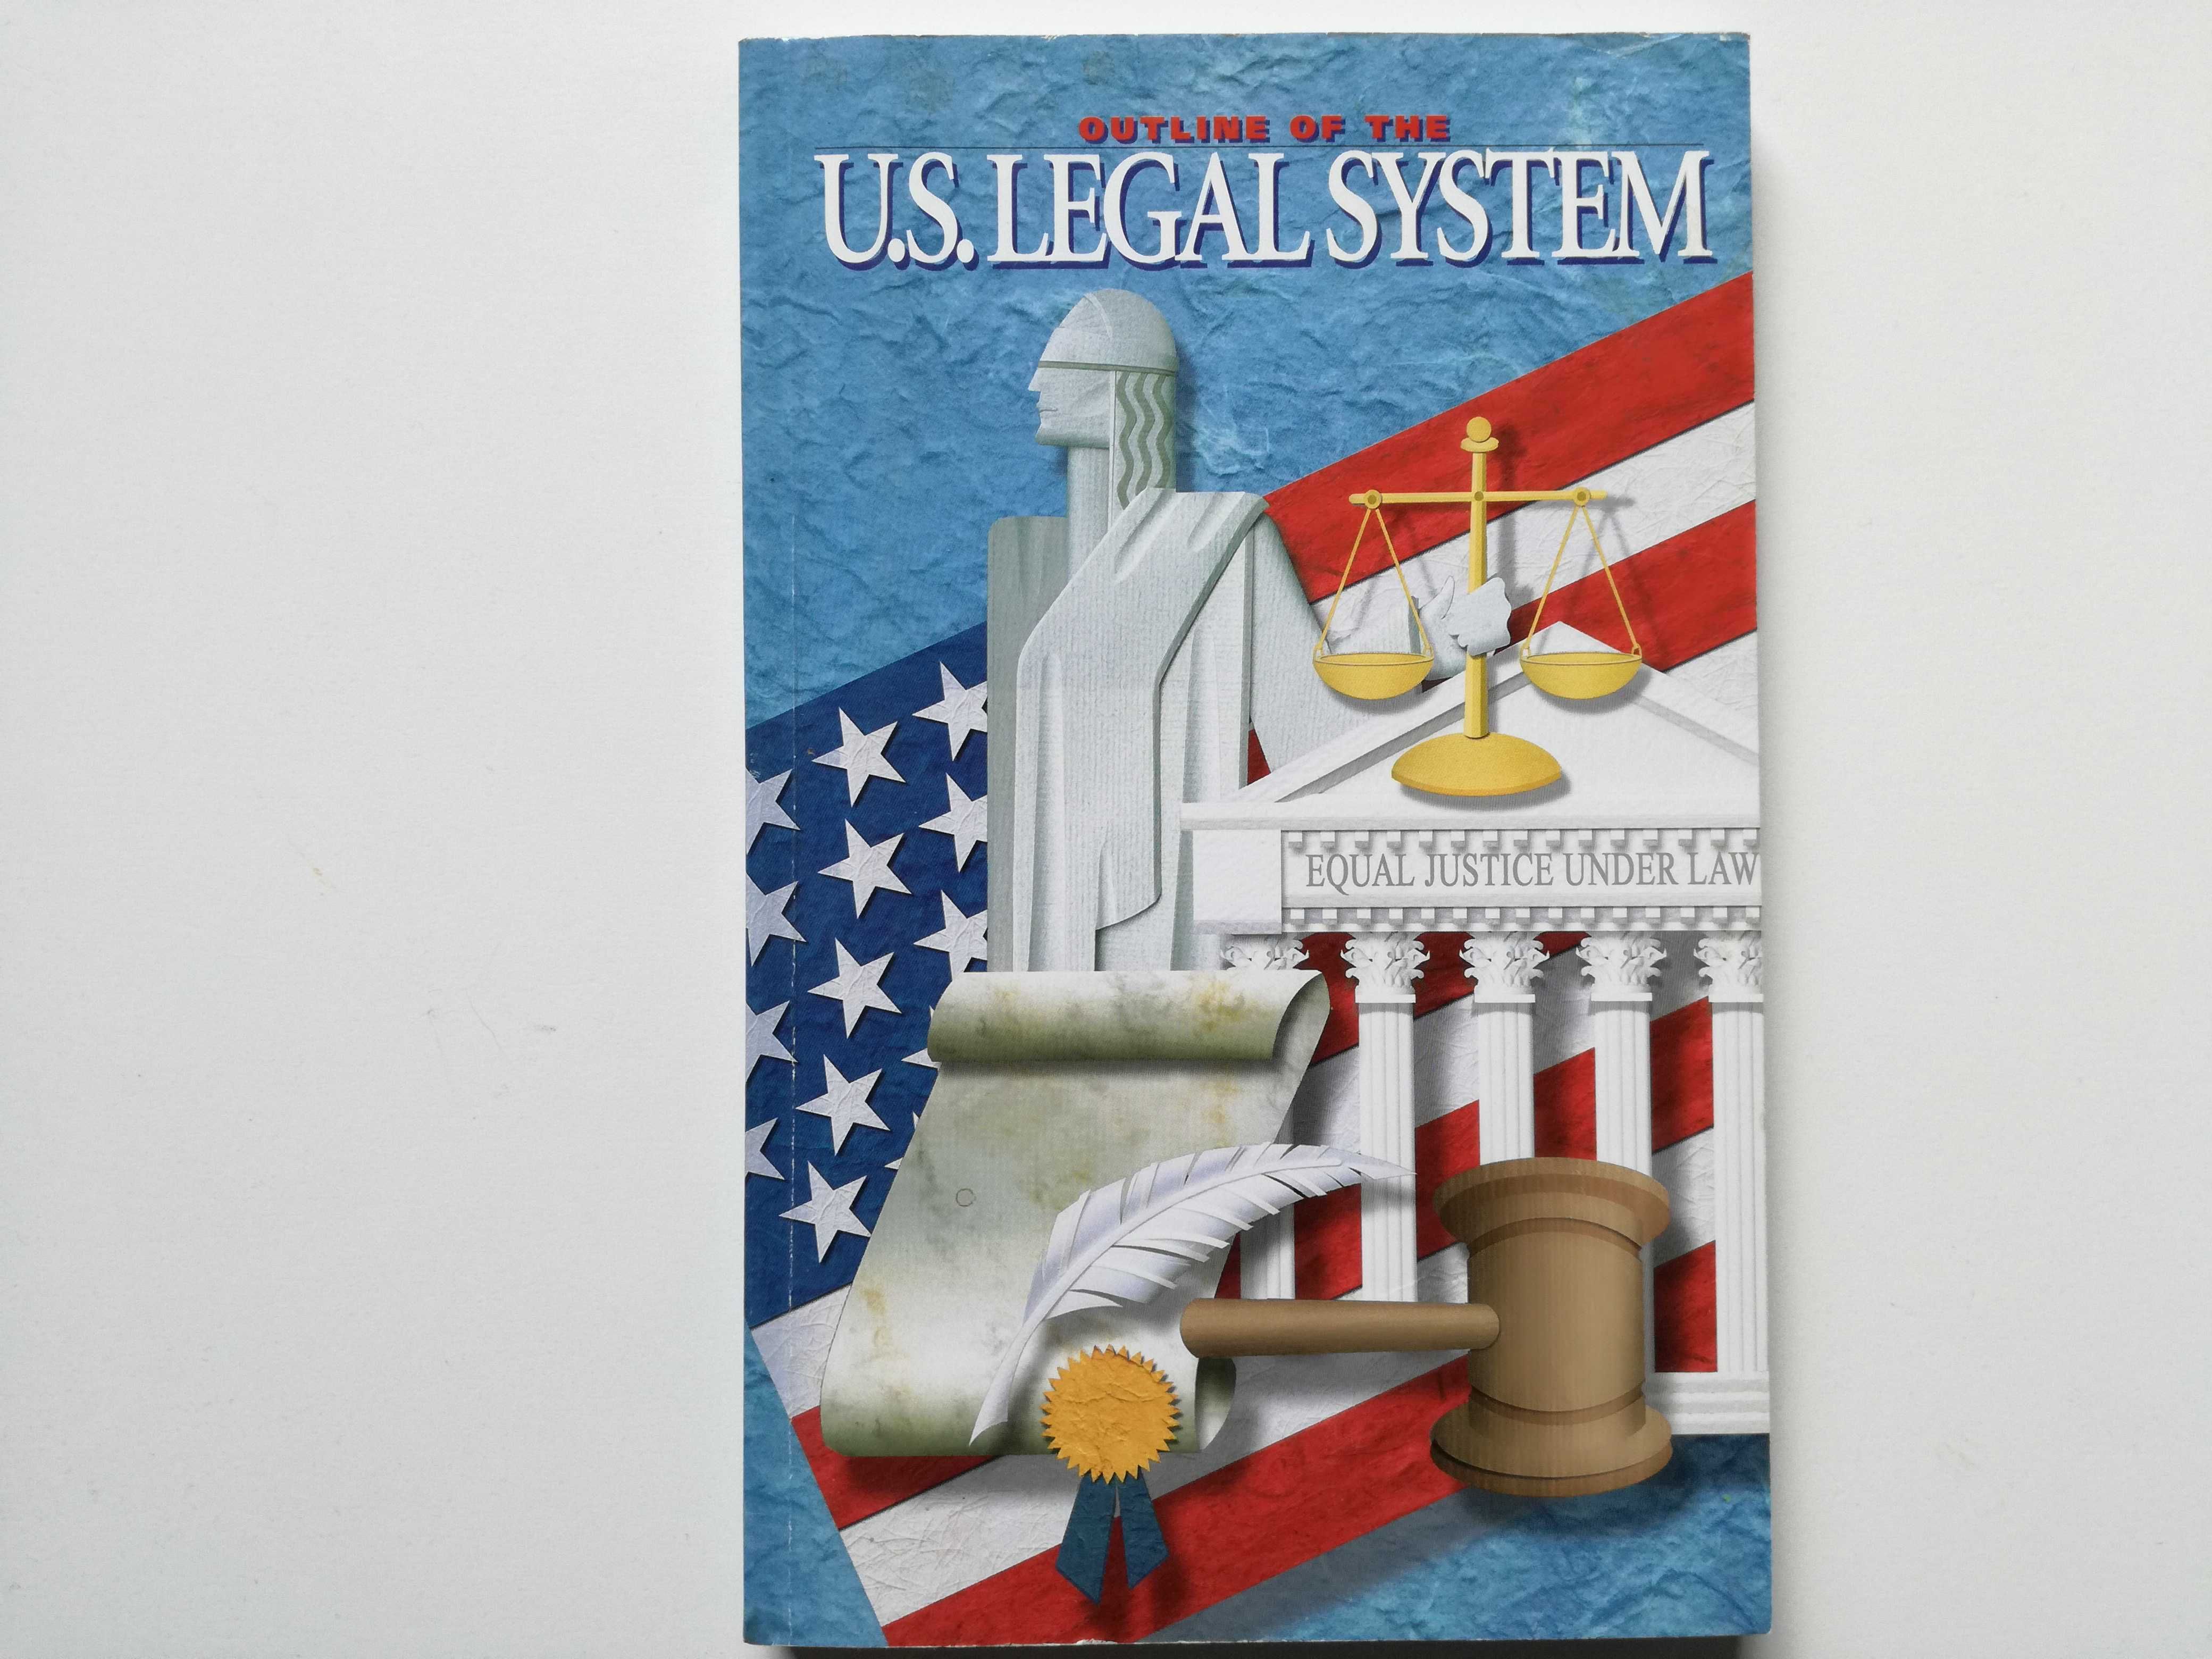 U.S. Legal system 2004